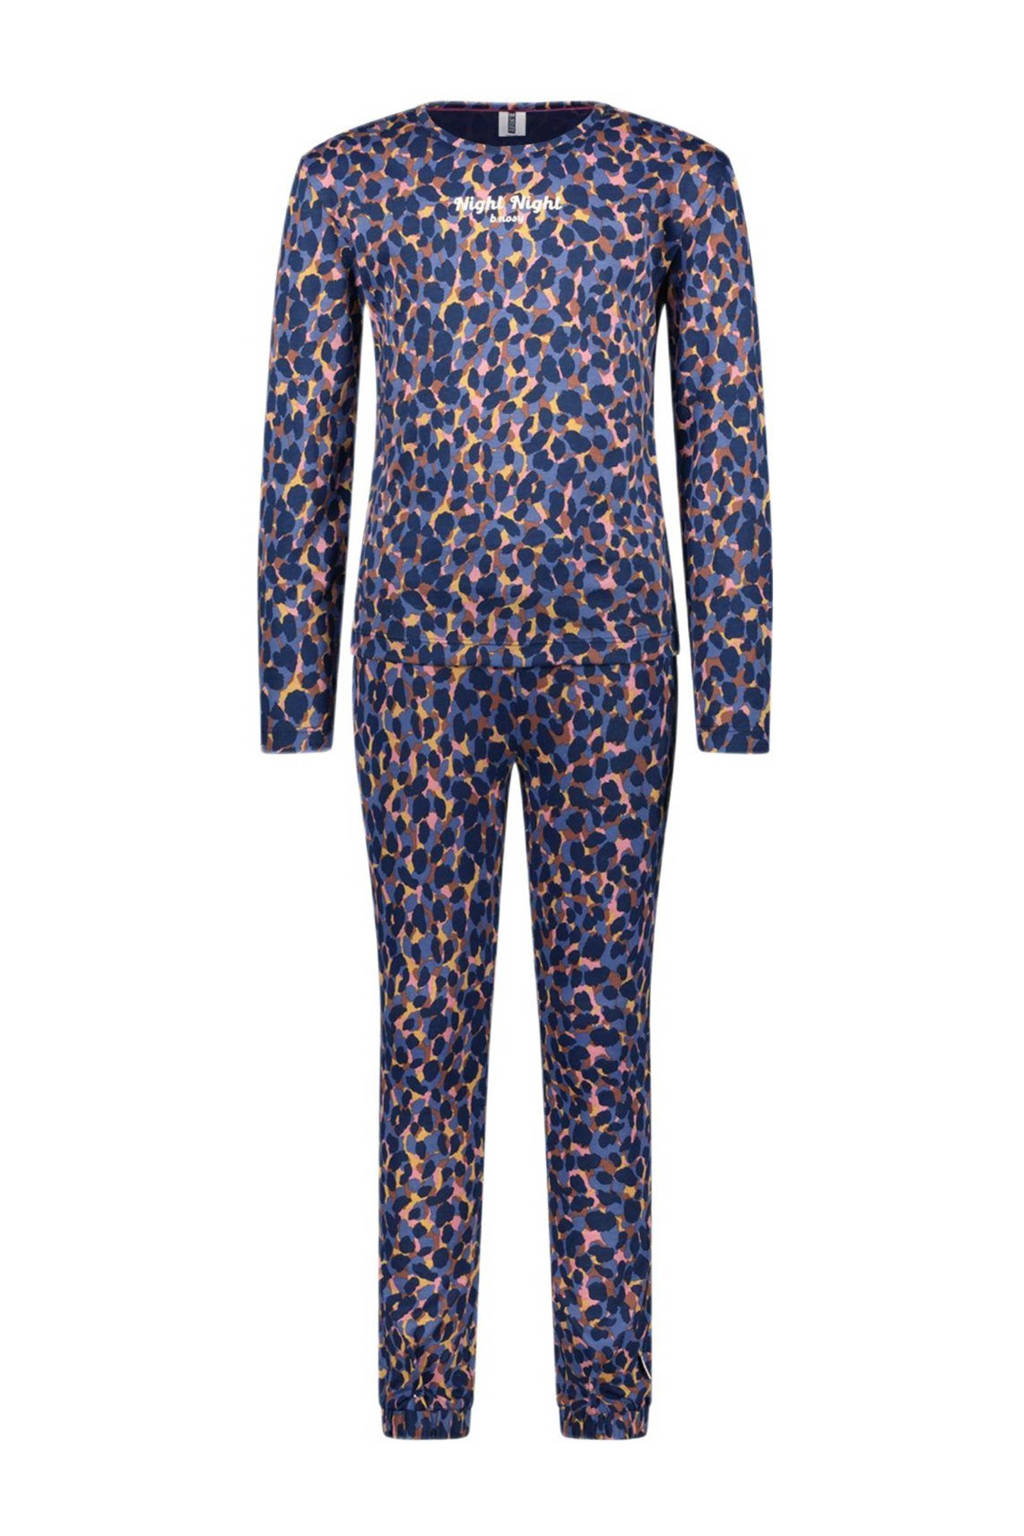 pyjama B. a SLEEP met all over print donkerblauw/roze/geel